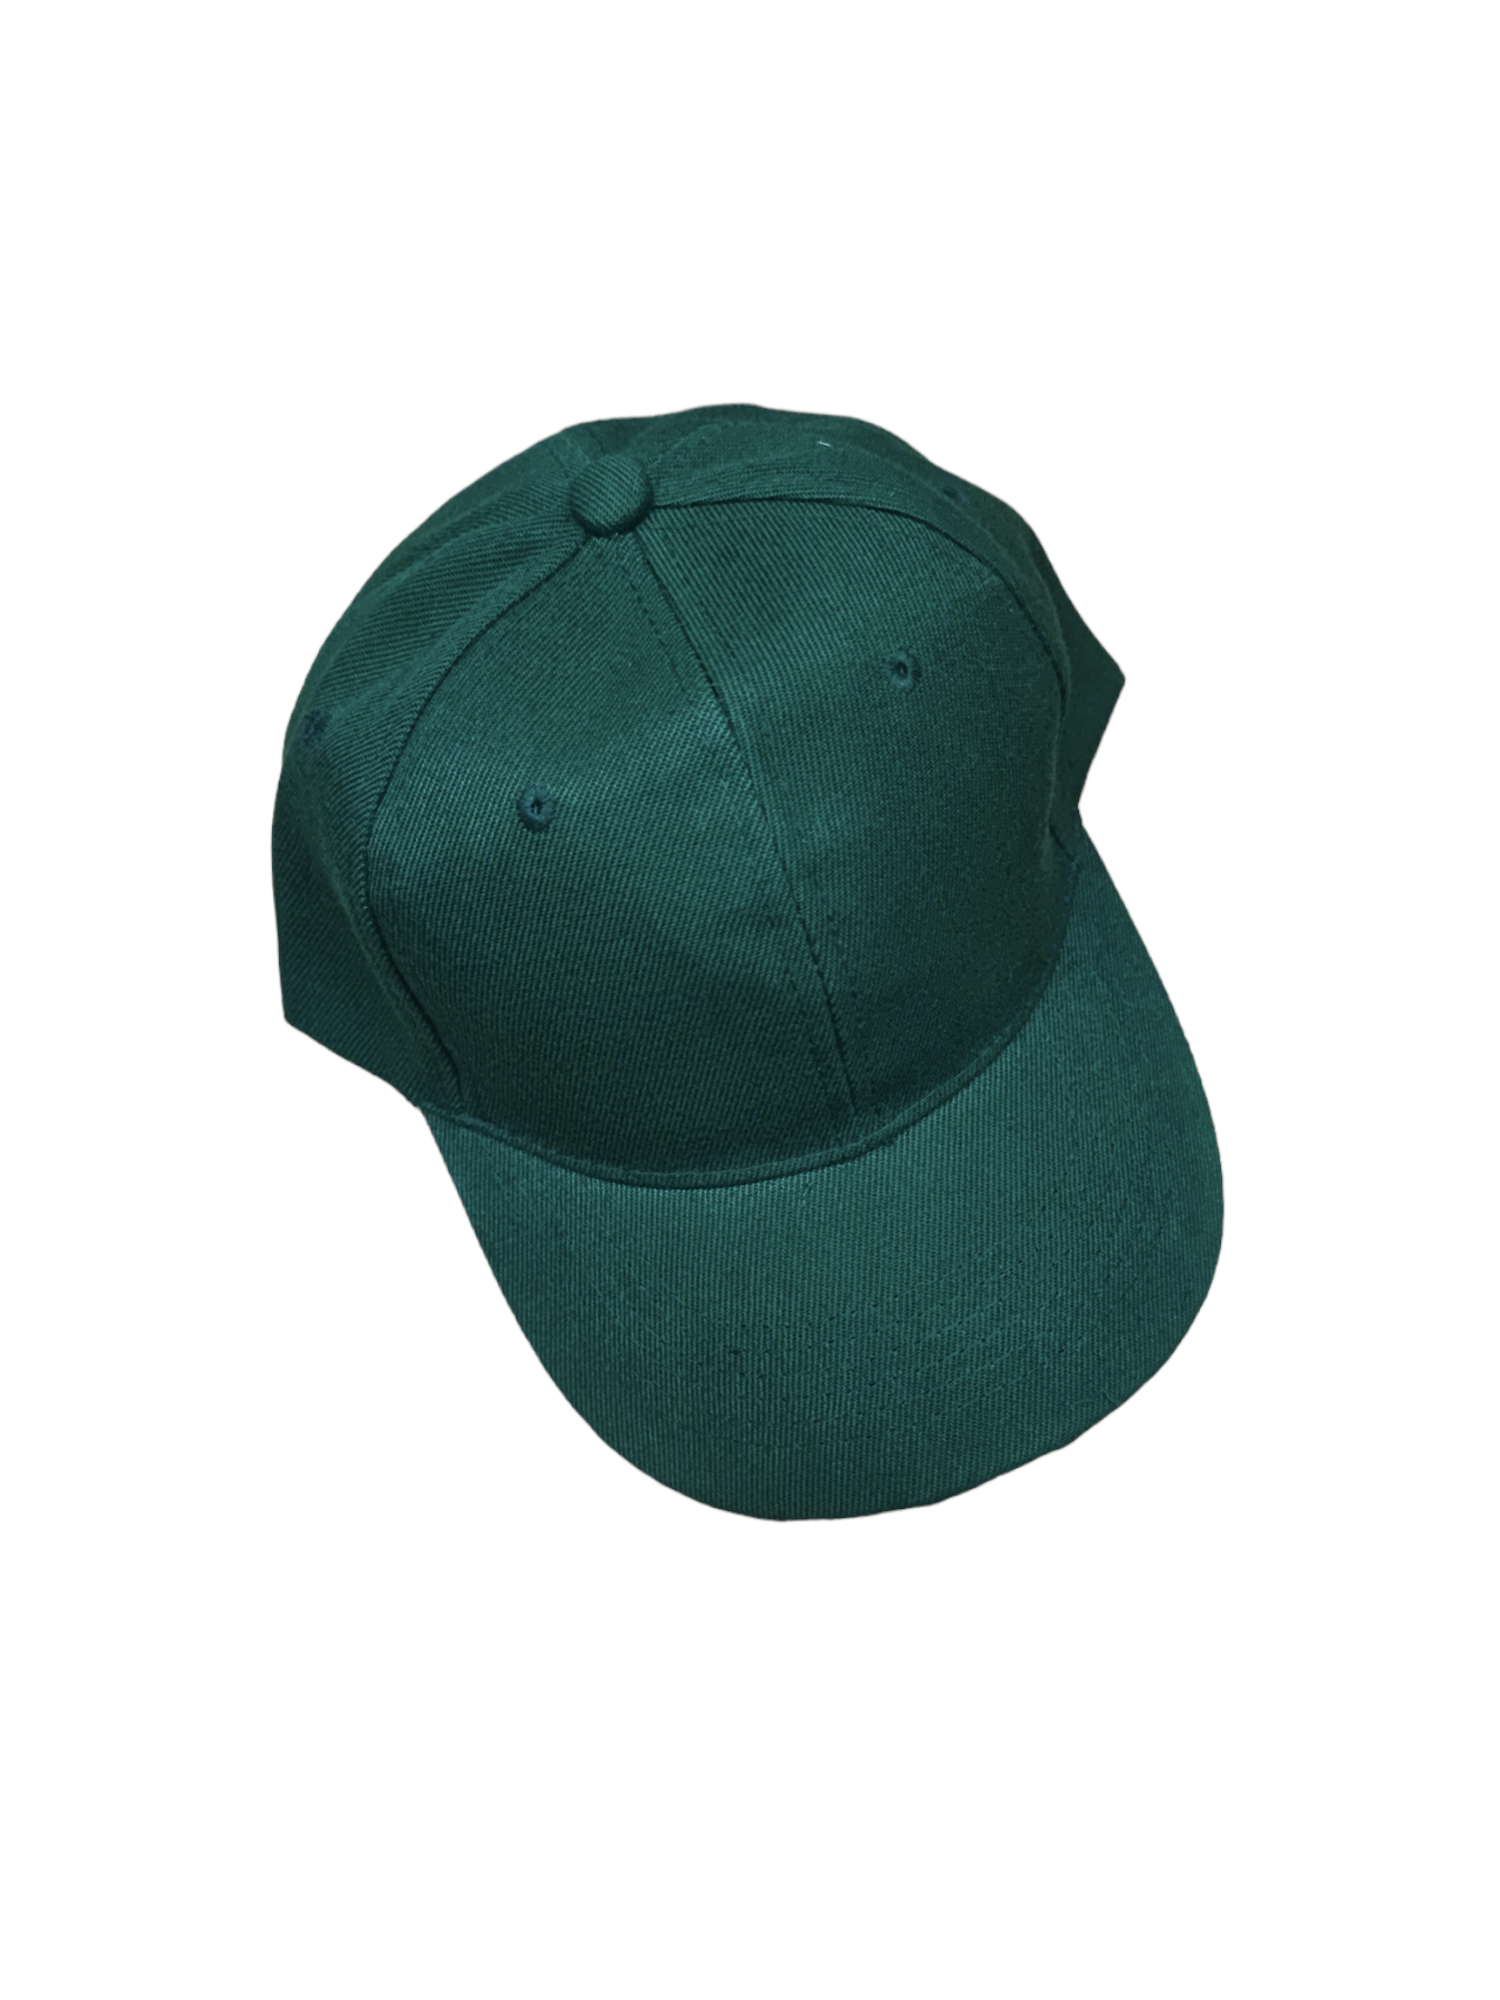 Dark green solid color cap (x12)#19